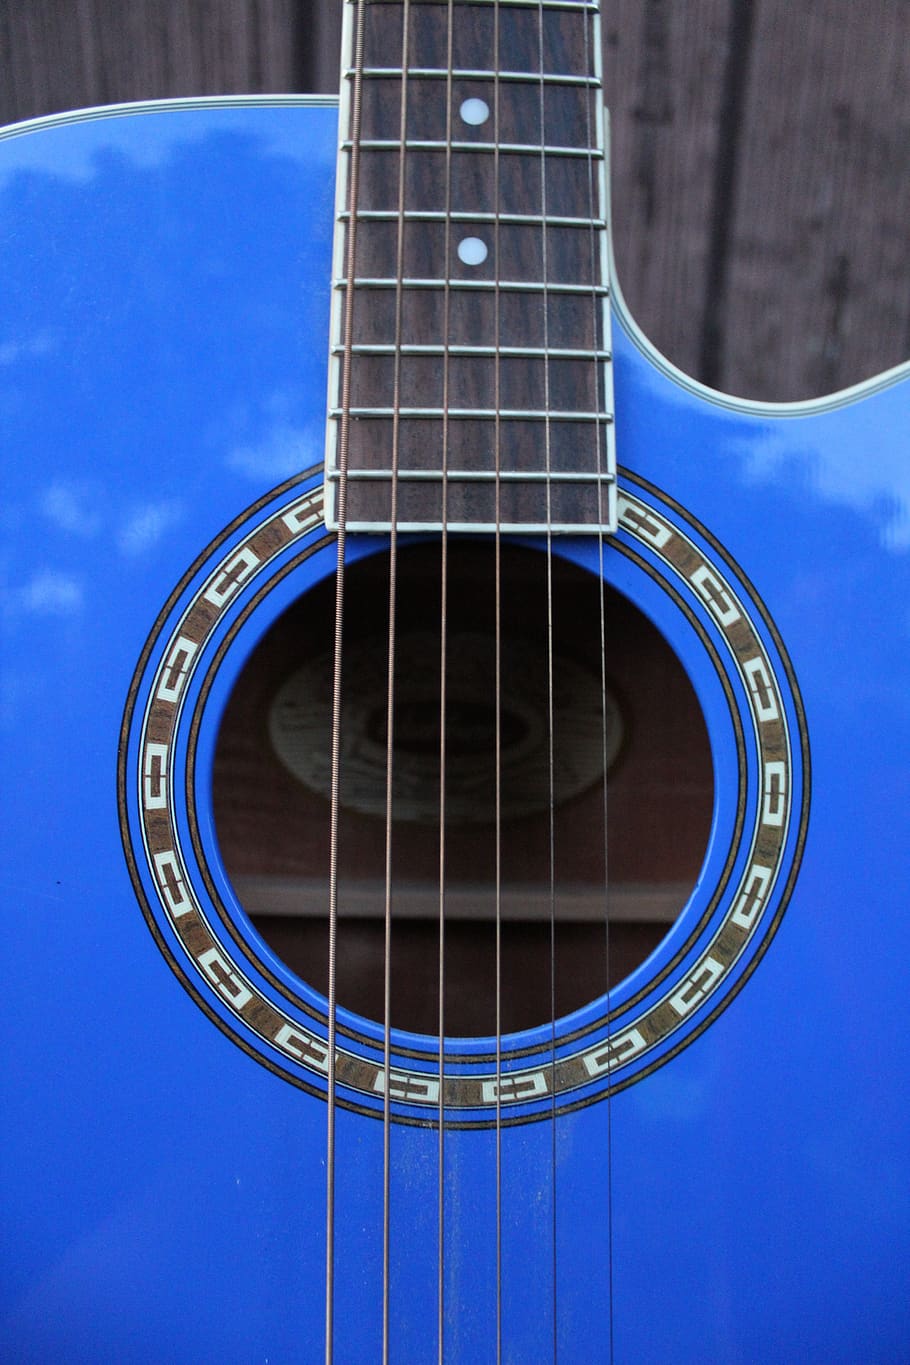 guitar, blue, music, close-up, strings, instrument, acoustic, lockscreen wallpaper, string instrument, musical instrument string